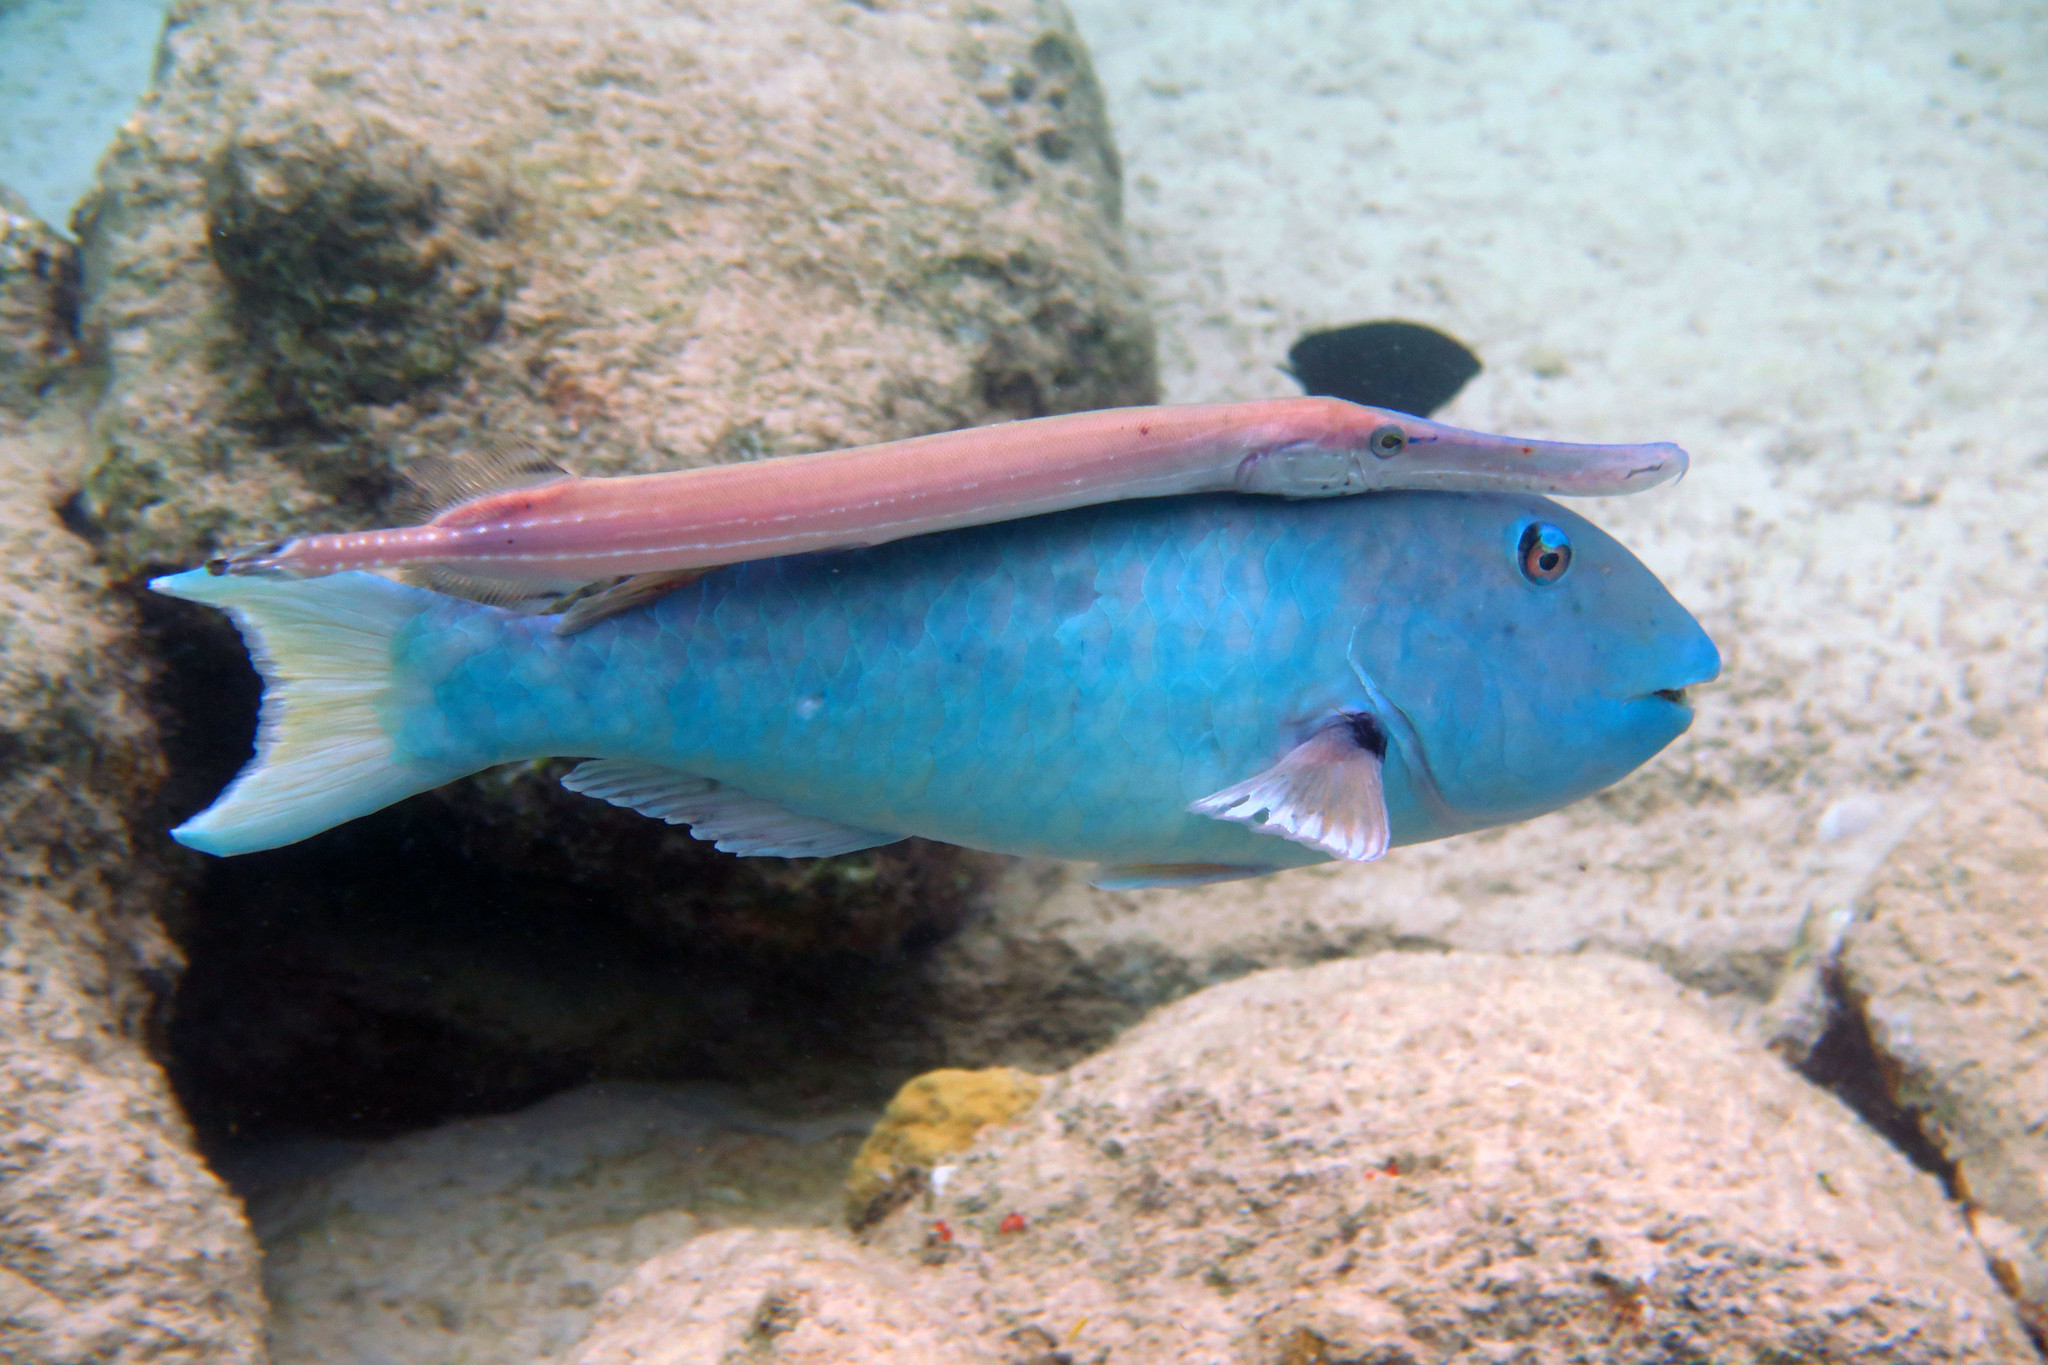 Trumpetfish "riding" a Parrotfish